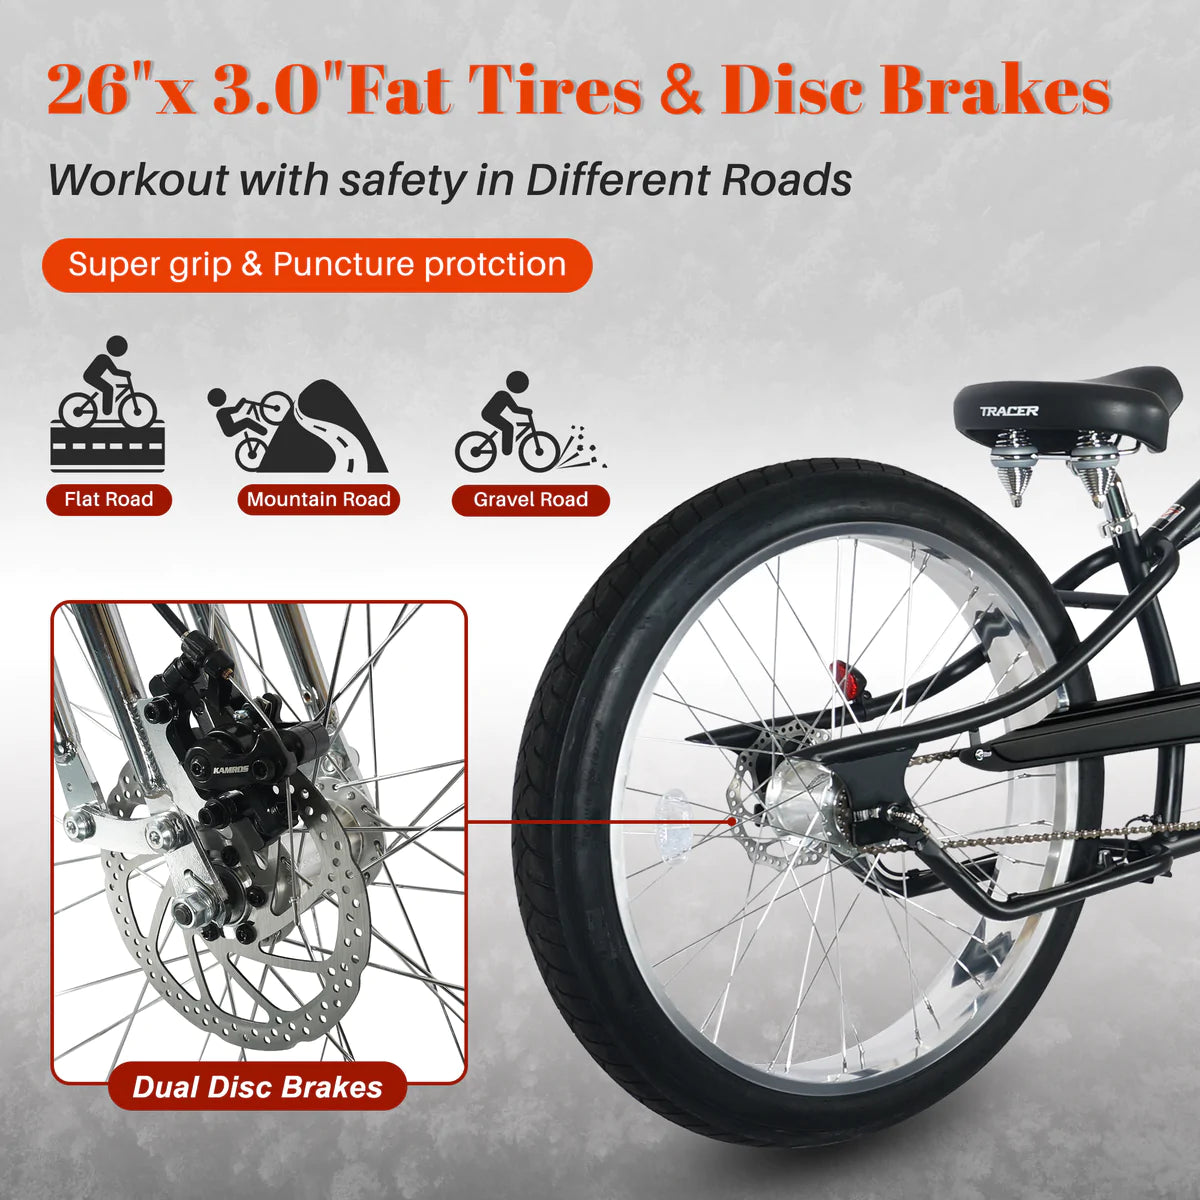 Siena Gts 3i Internal 3-speed | 3-speed | Fat Tire Bike | Cruiser Fat Tire Bike | Stretch Bike | Fat Tire | Bike Lover USA